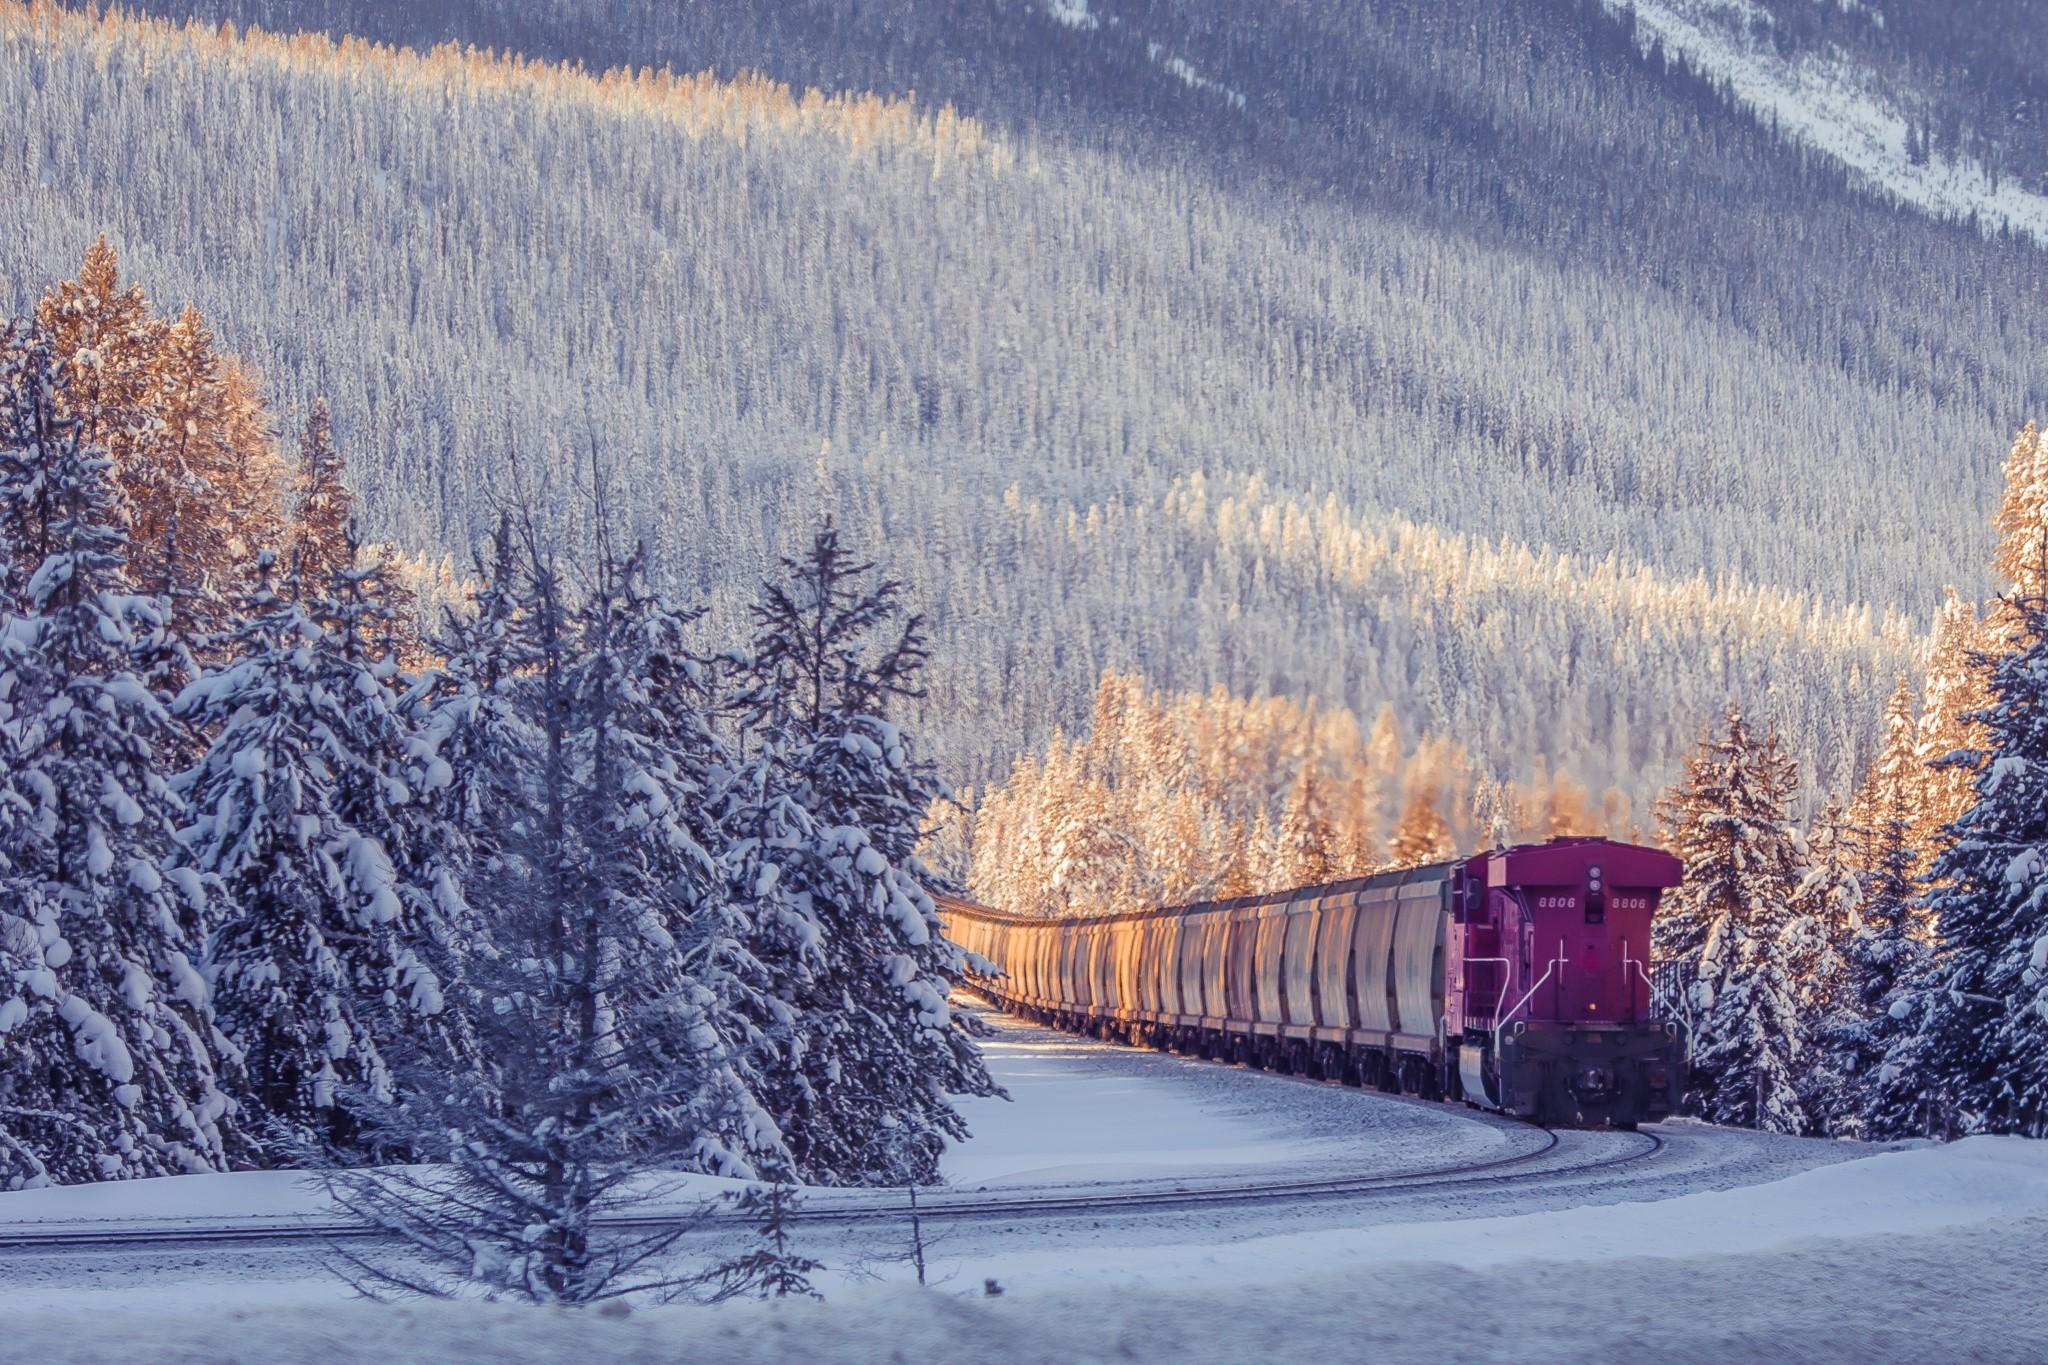 Train Tracks During Winter Season | HD Wallpapers